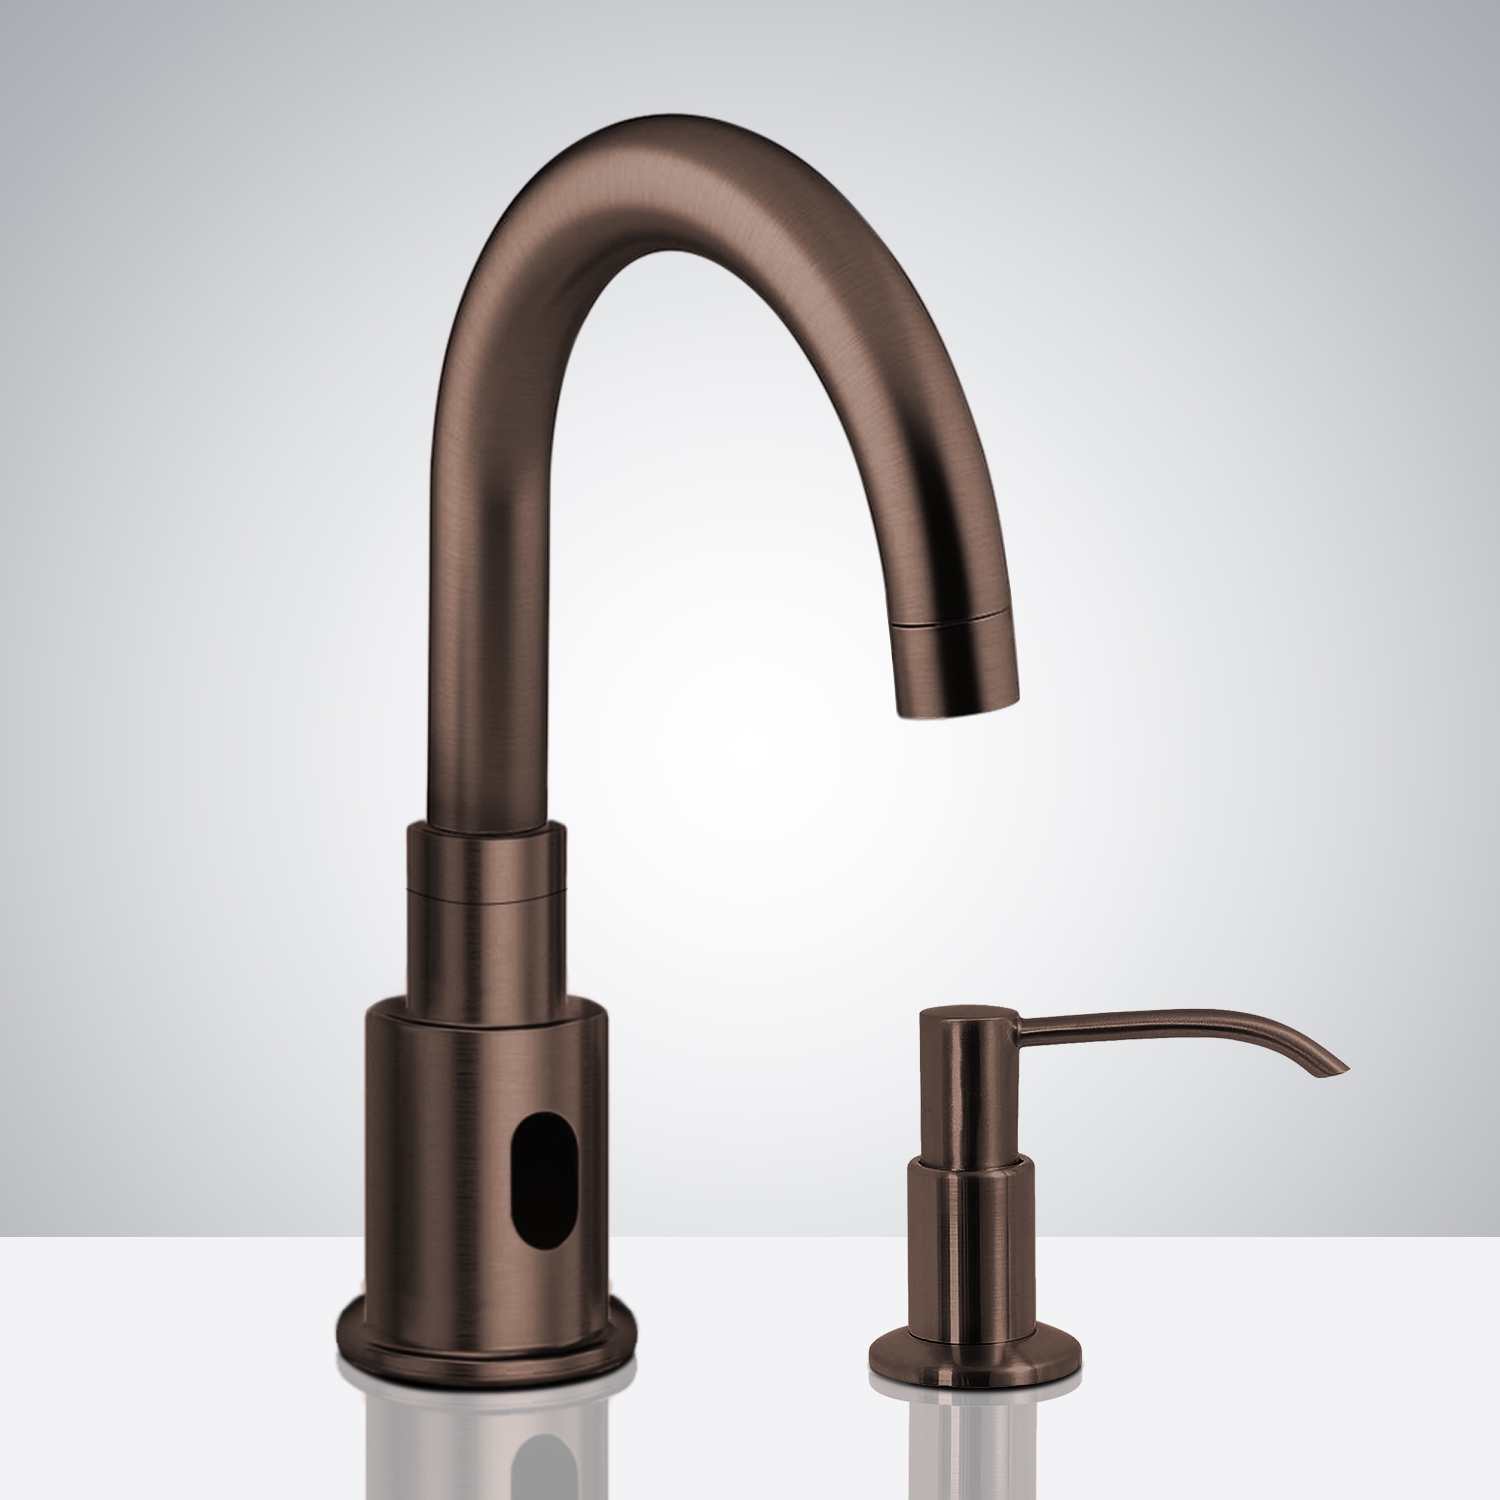 Fontana Commercial Oil Rubbed Bronze Touchless Automatic Sensor Faucet & Manual Soap Dispenser